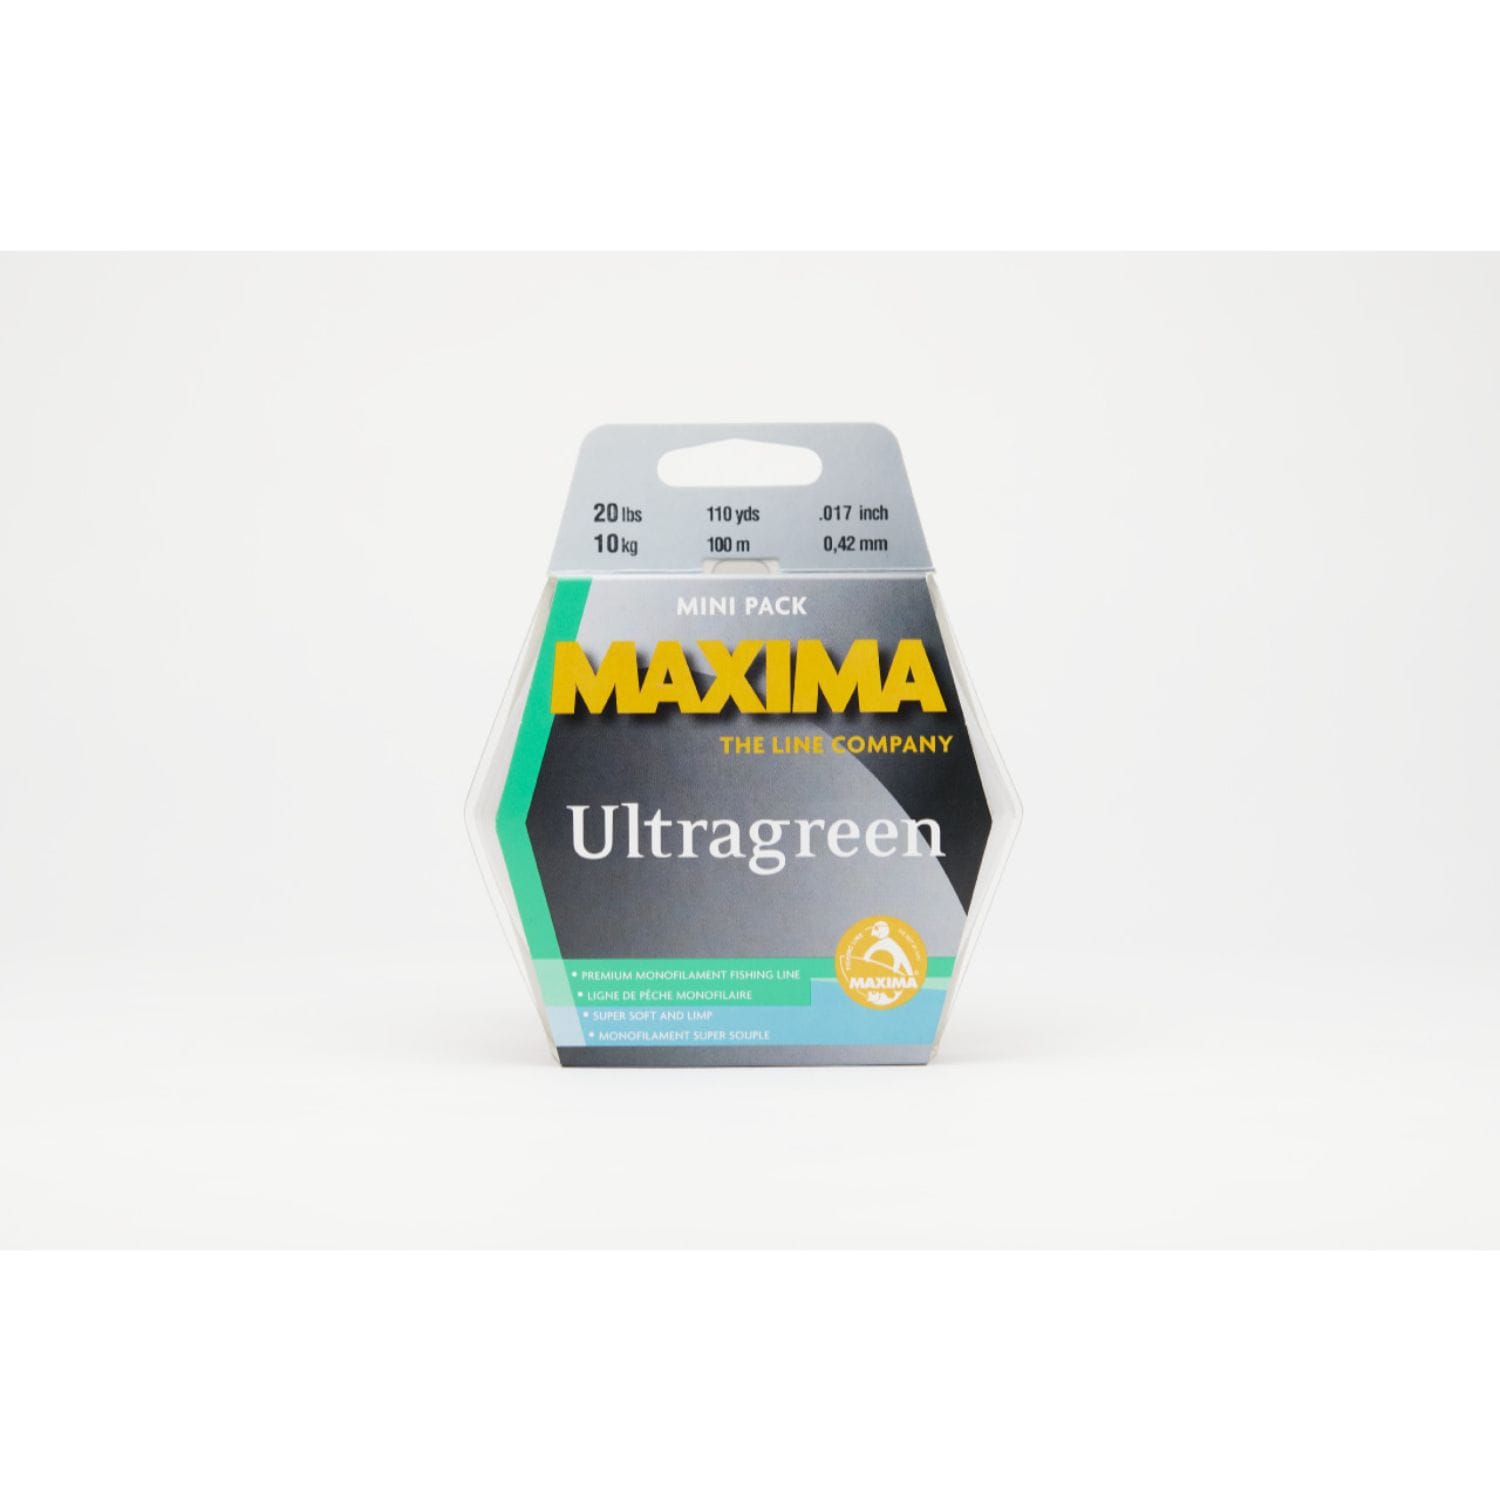 Maxima Fishing Line Fishing : Line Maxima Ultragreen Mini Pack 20lb 110yds